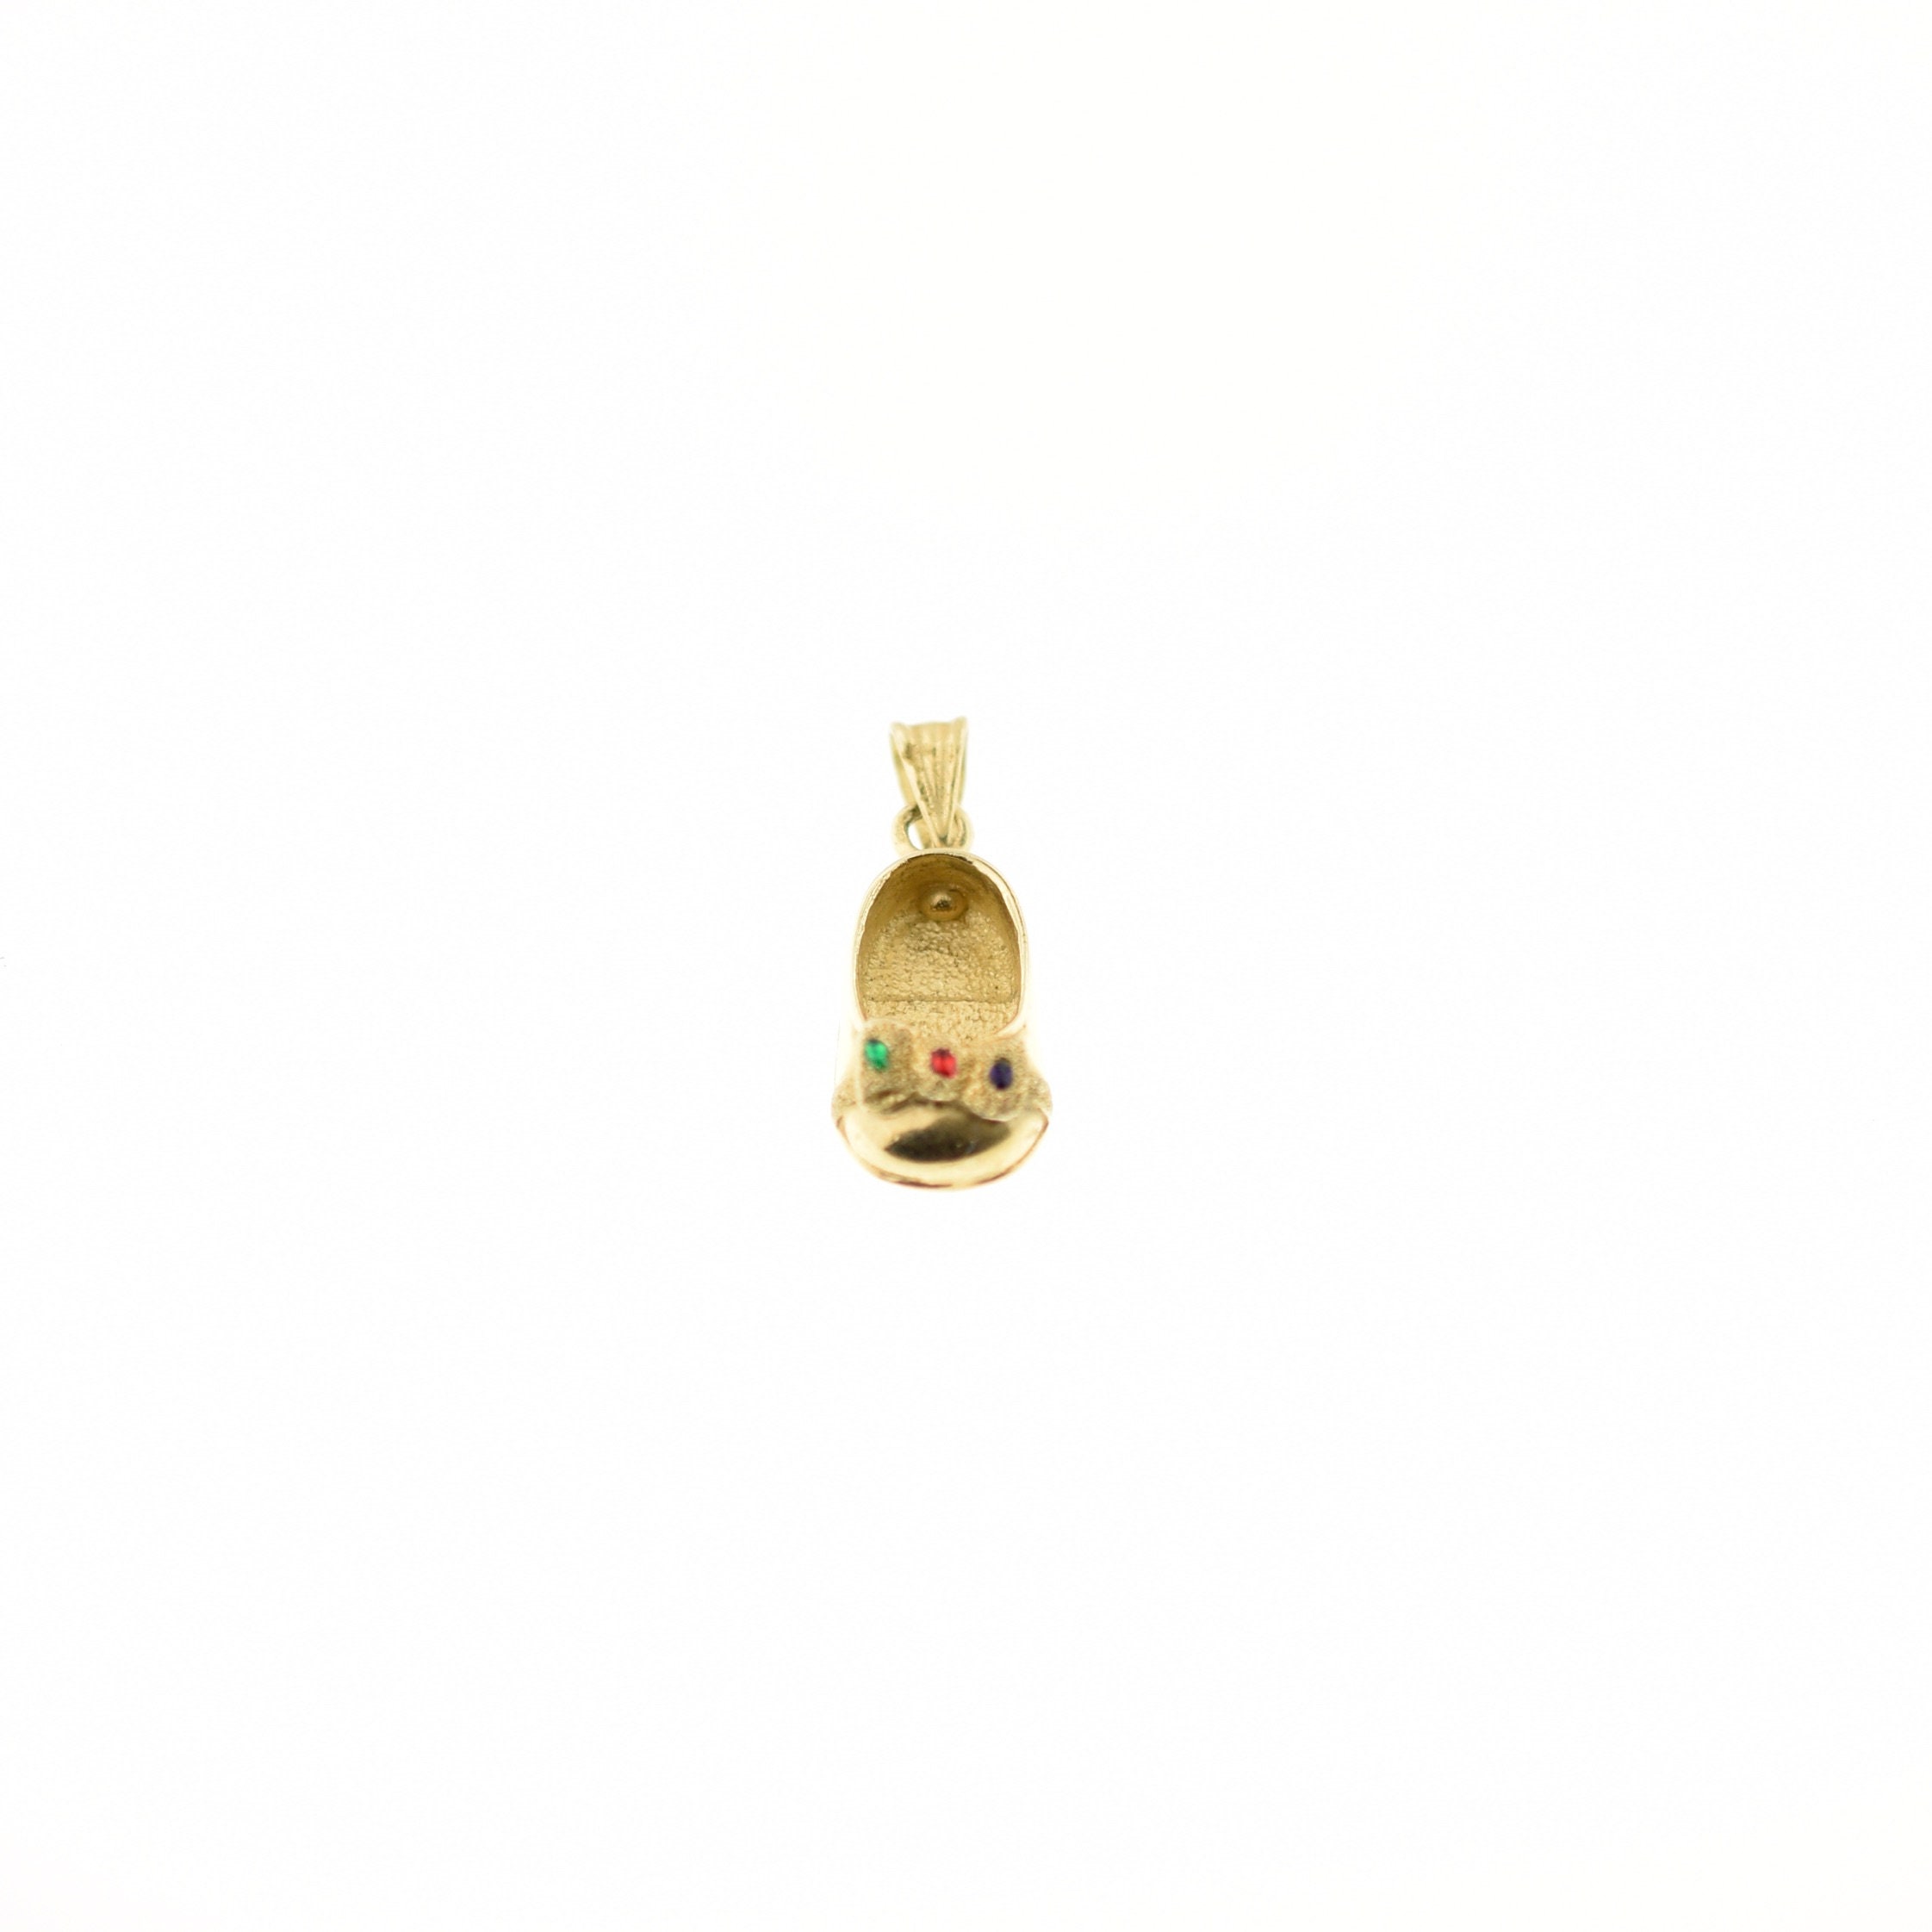 14k Yellow Gold Baby Shoe Birthstone Charm or Pendant